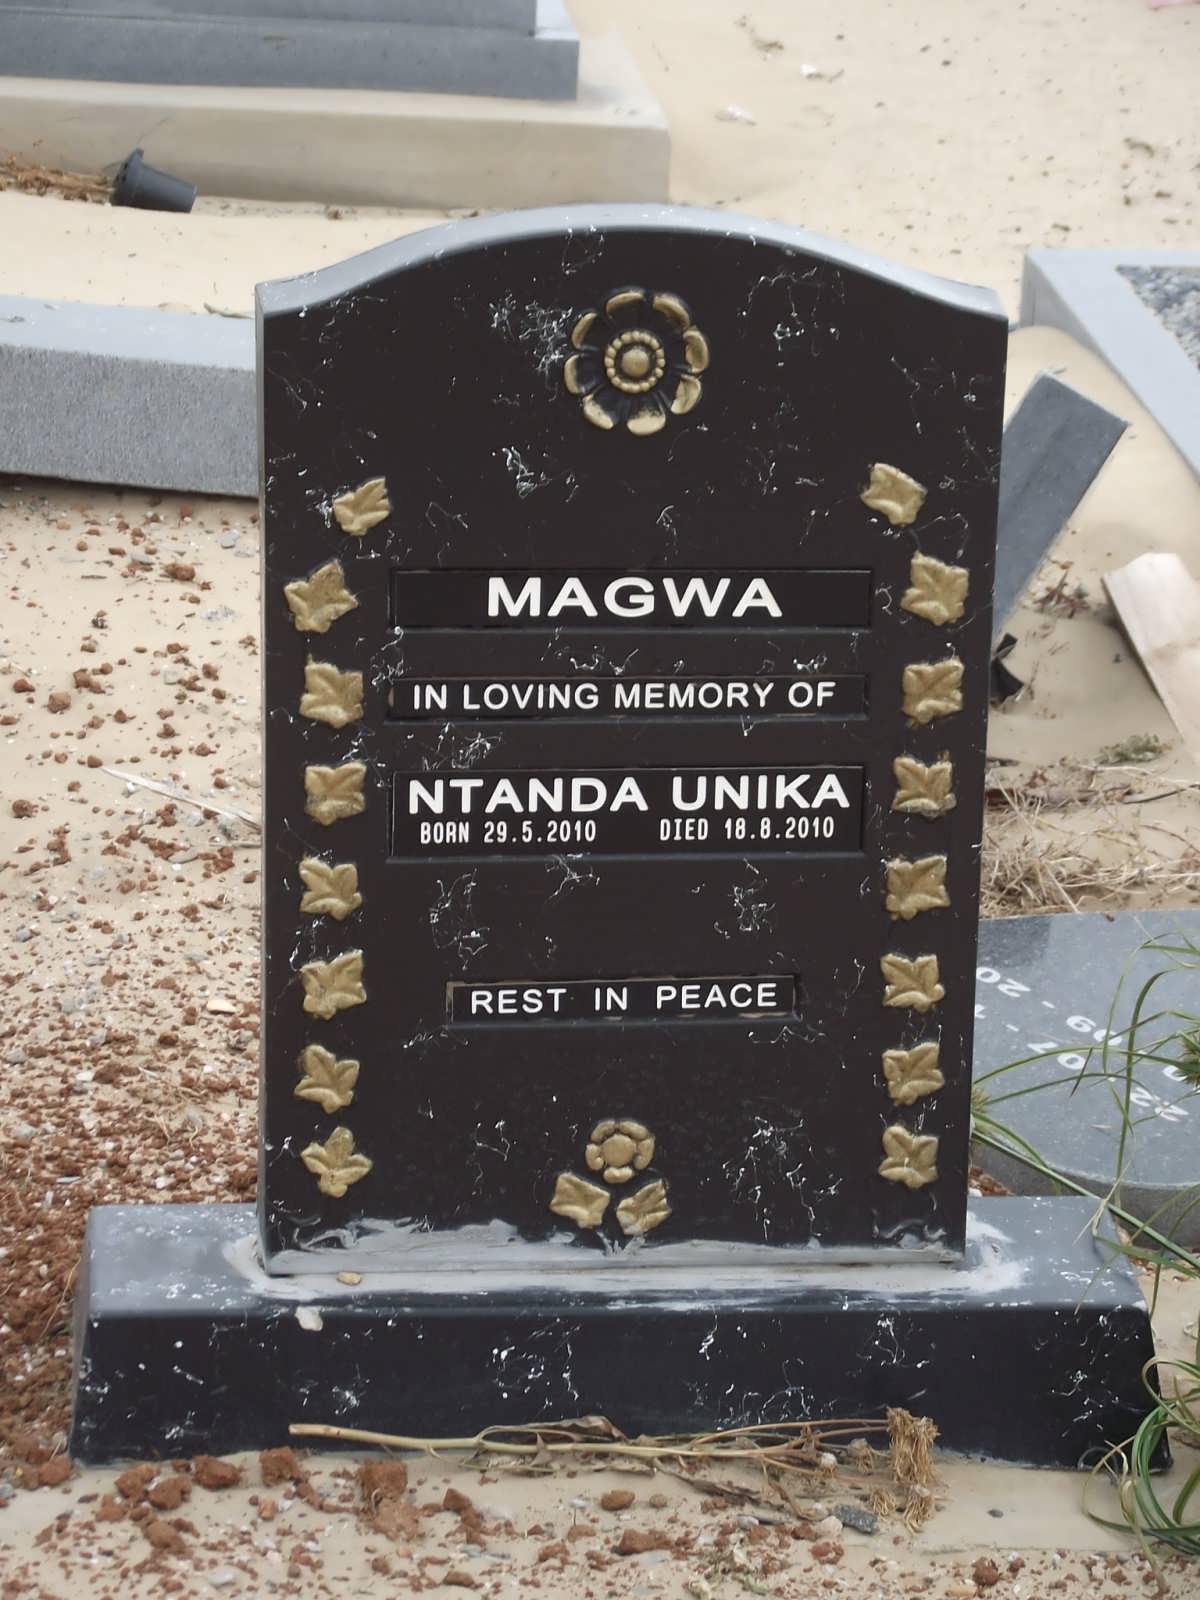 MAGWA Ntanda Unika 2010-2010